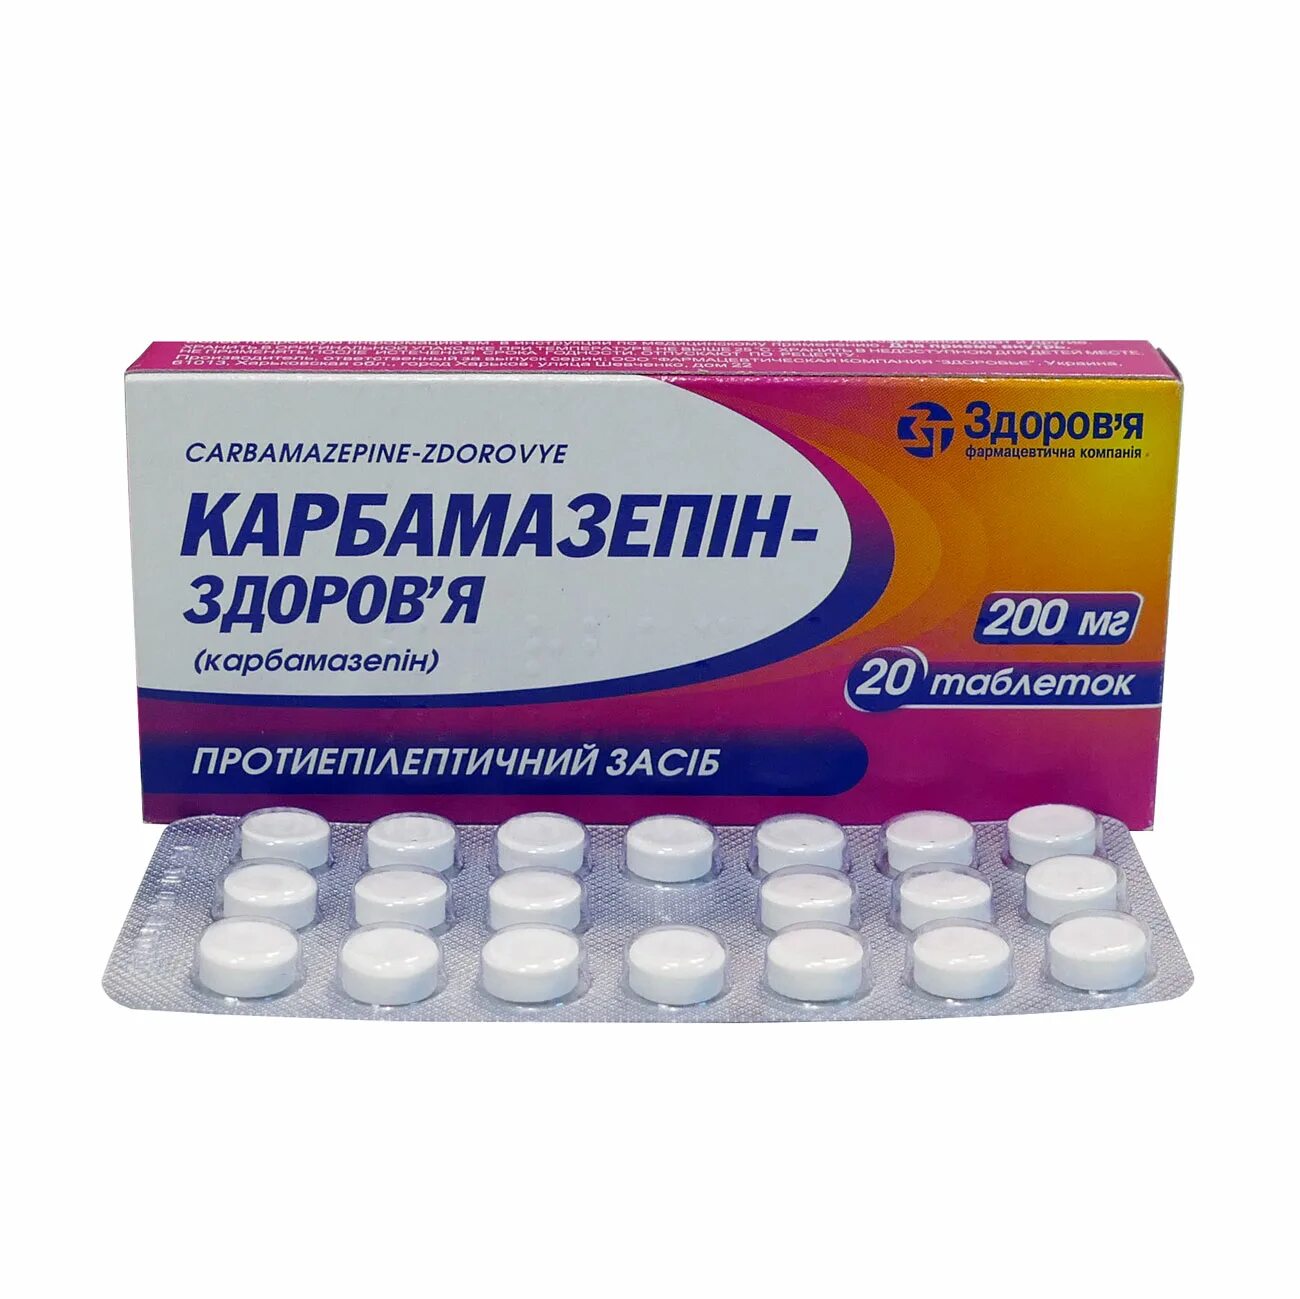 Карбамазепин 200 мг. Карбамазепин-Синтез 200мг таб n50. Карбамазепин таб 200мг n50. Карбамазепин таблетки 200 мг. Карбамазепин купить рецепт